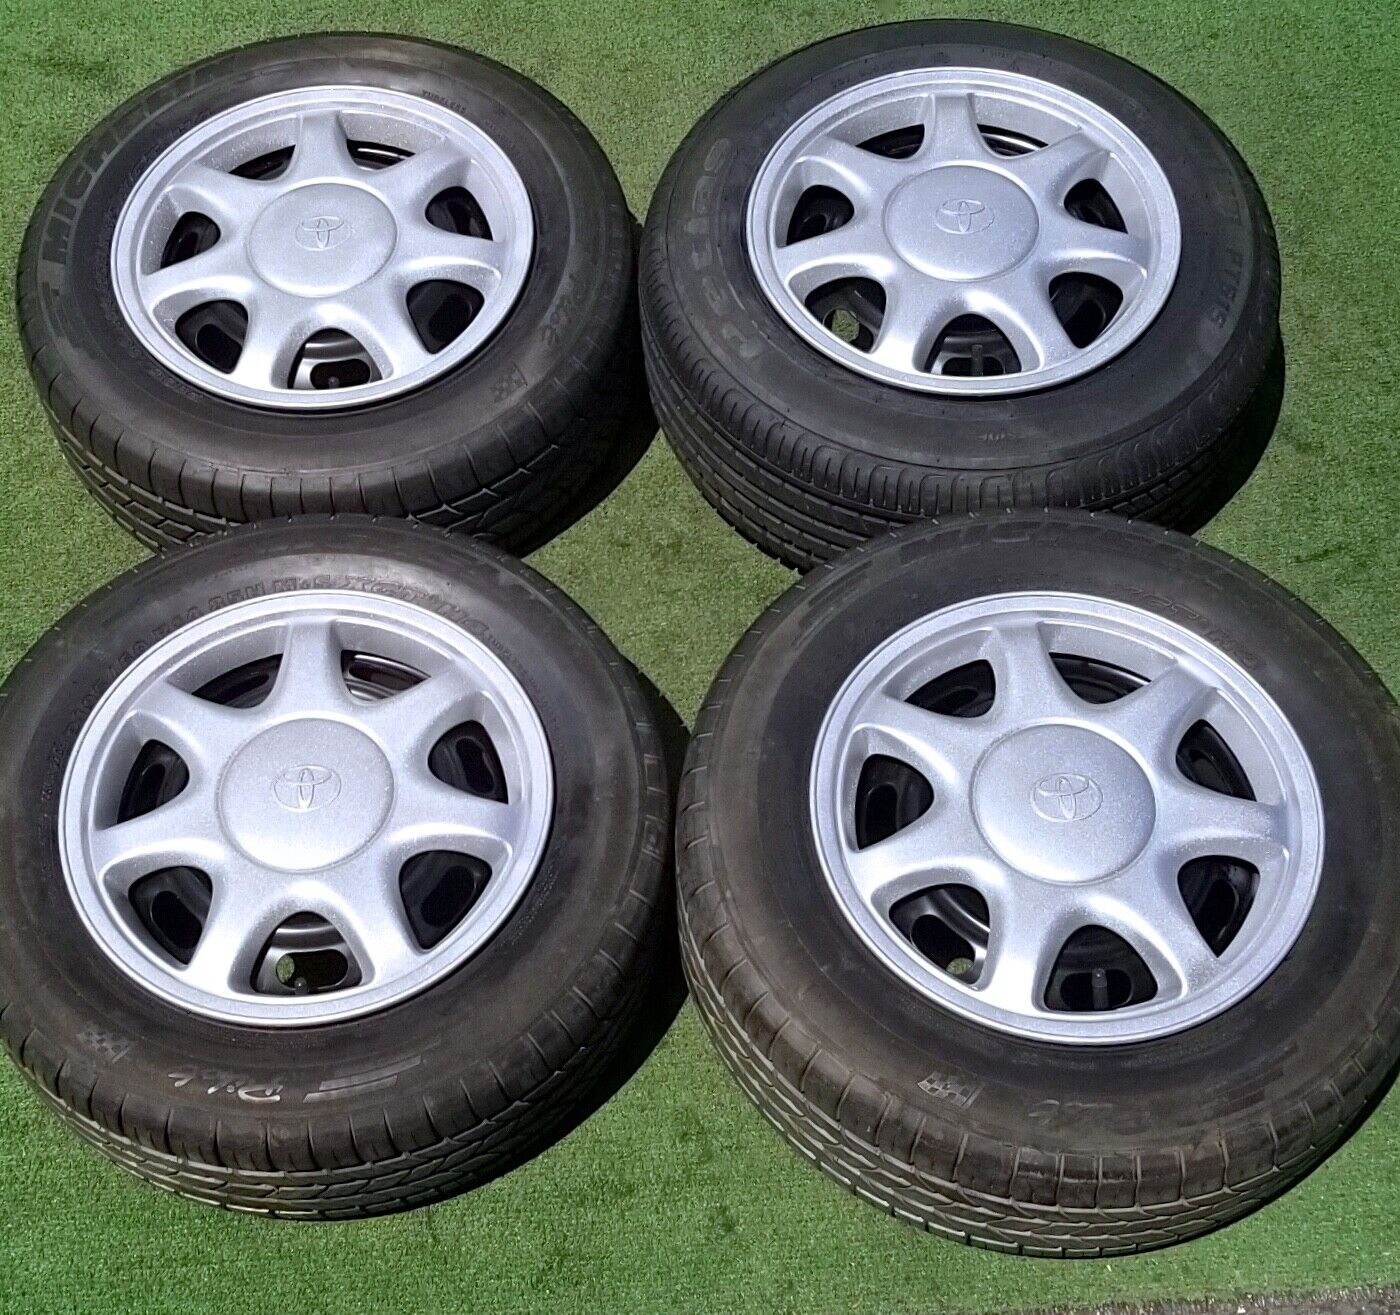 Factory Toyota MR2 Wheels Tires Hubcaps Covers Set 4 OEM 1989 thru 2000 5 Lug